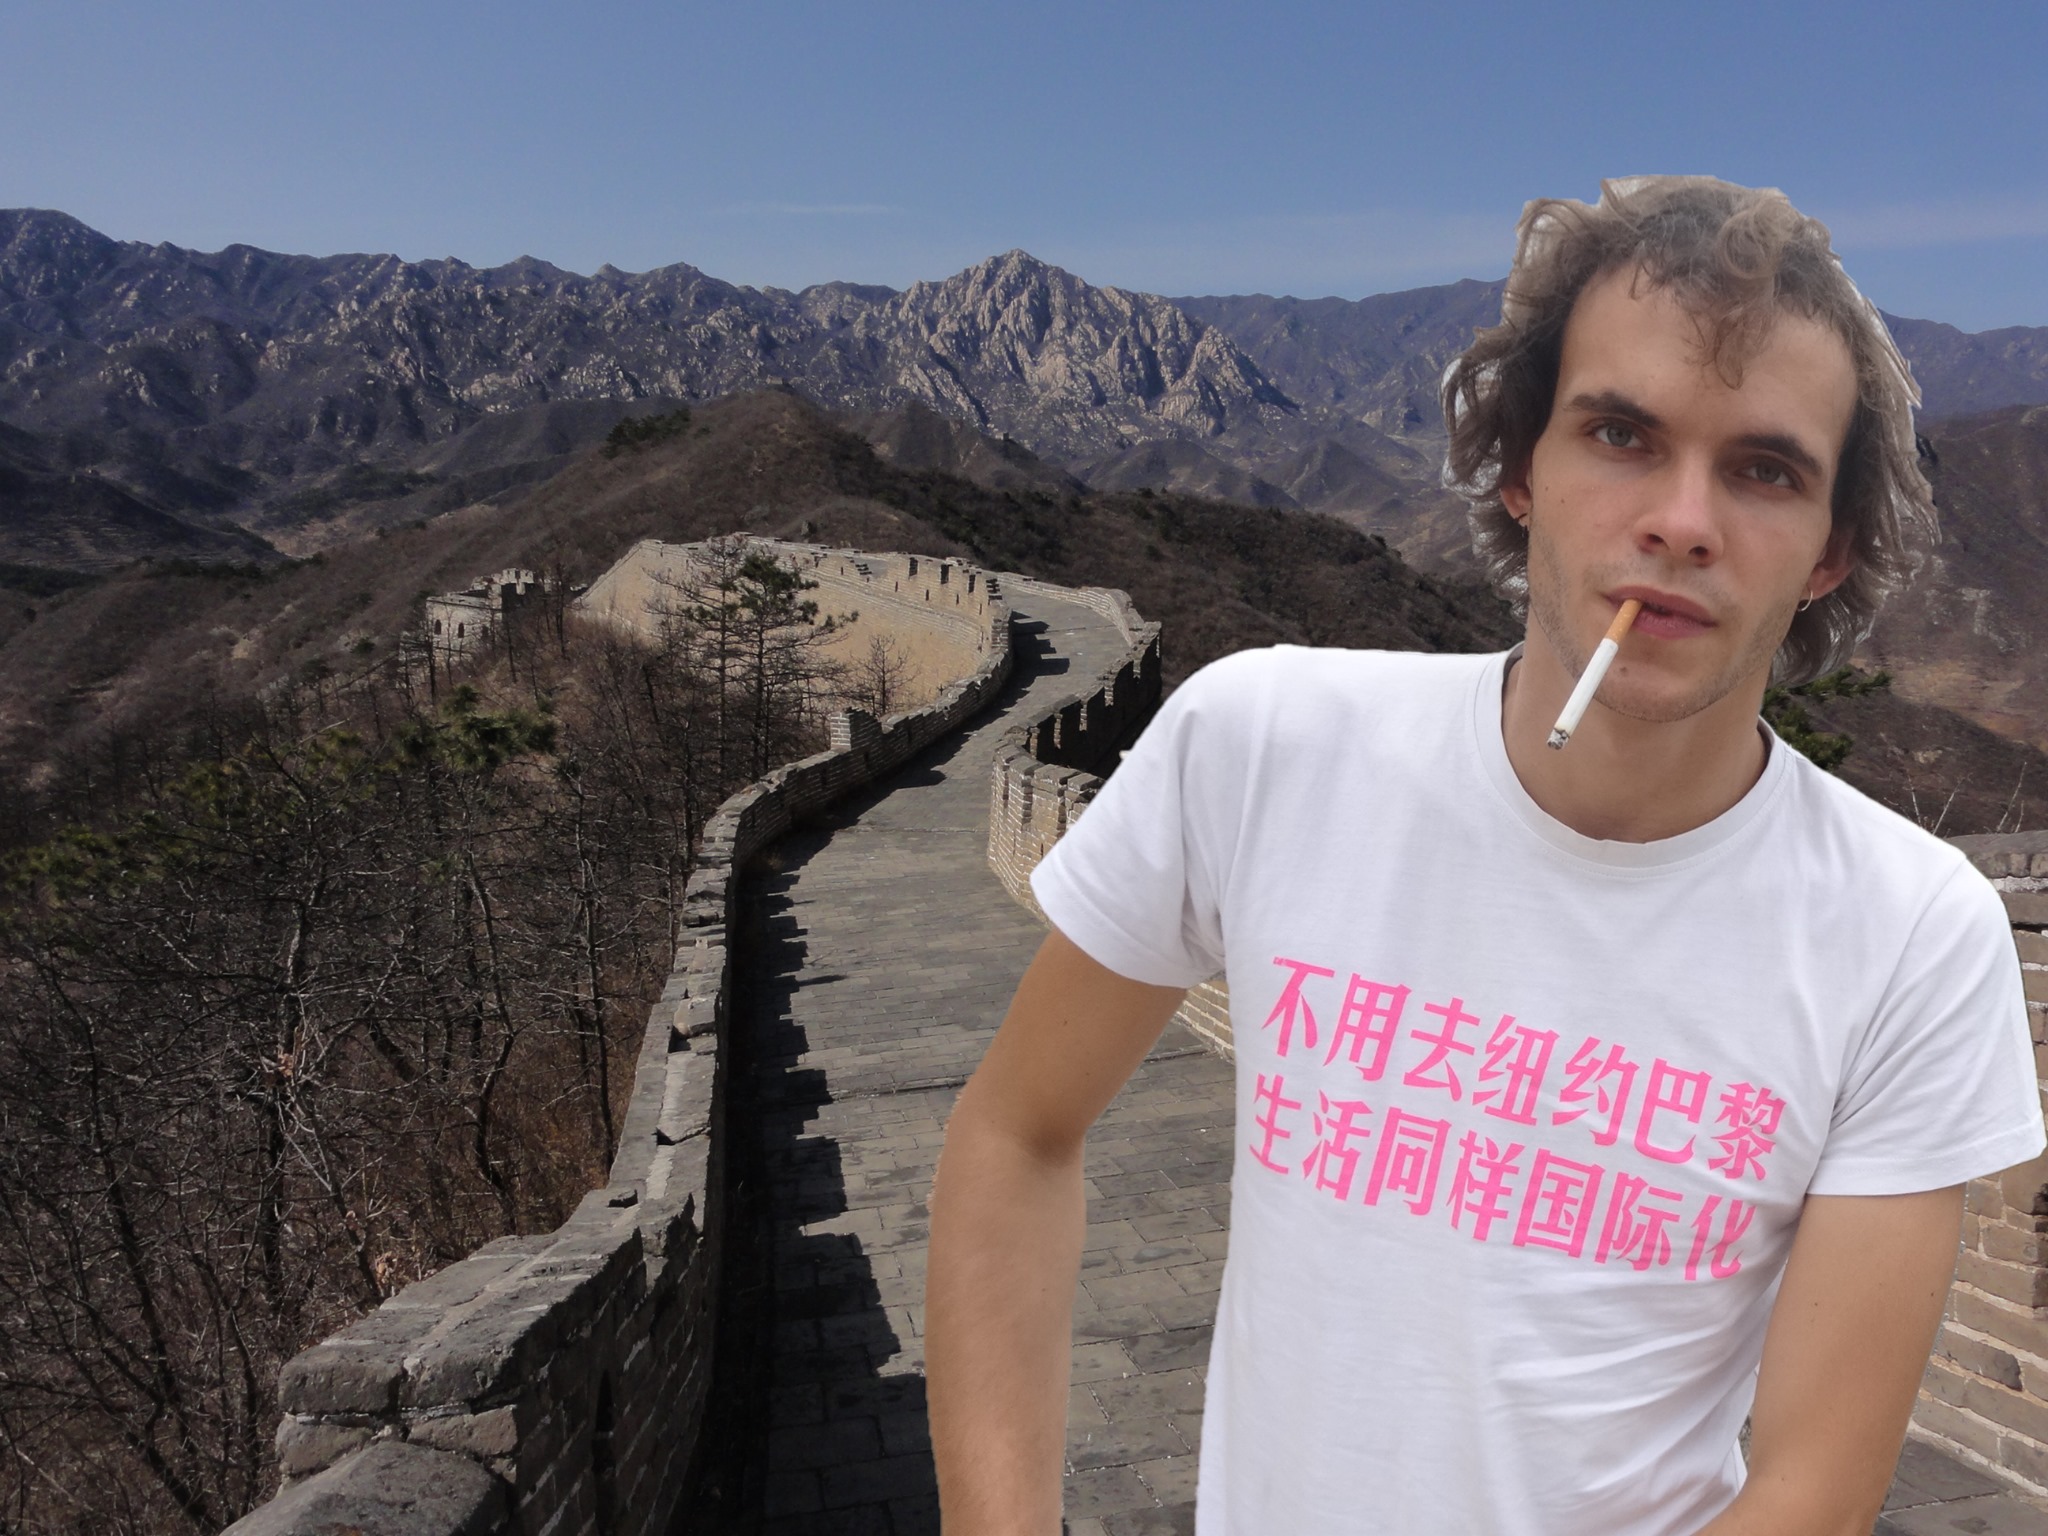 CRISTINA MOTTA | “Na Muralha da China & Outros Kalkitos”